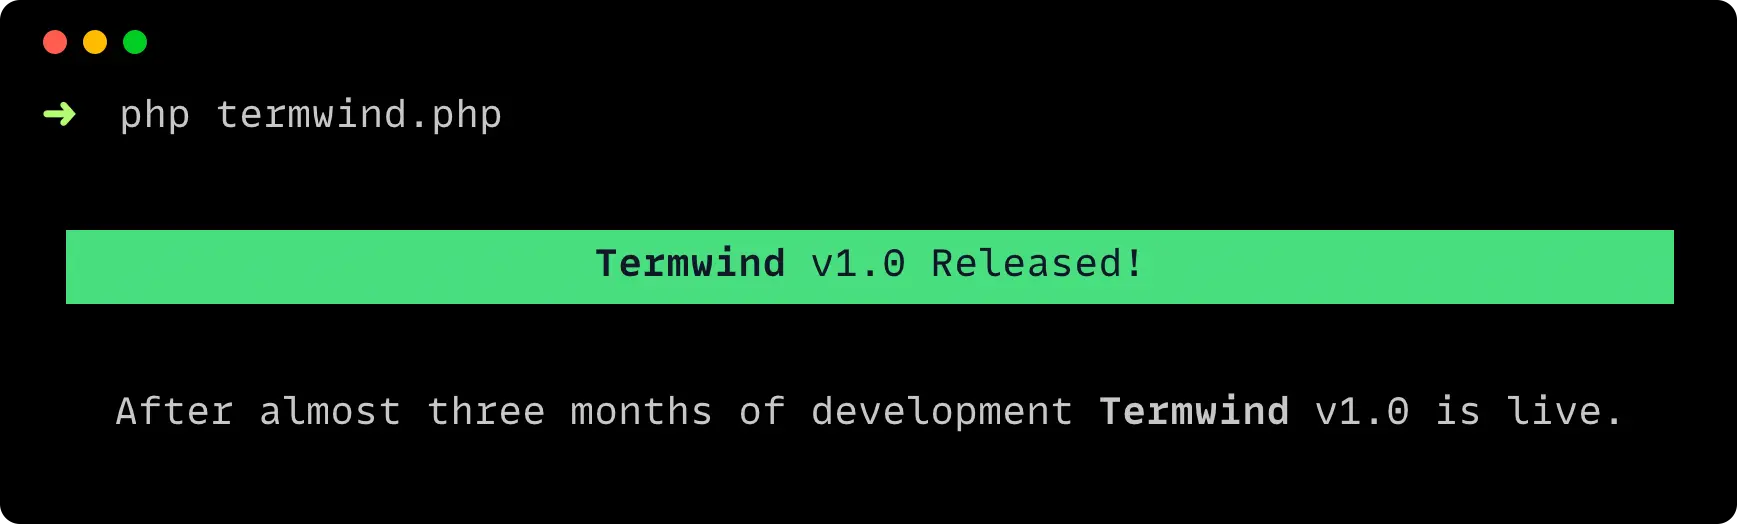 Termwind Released!